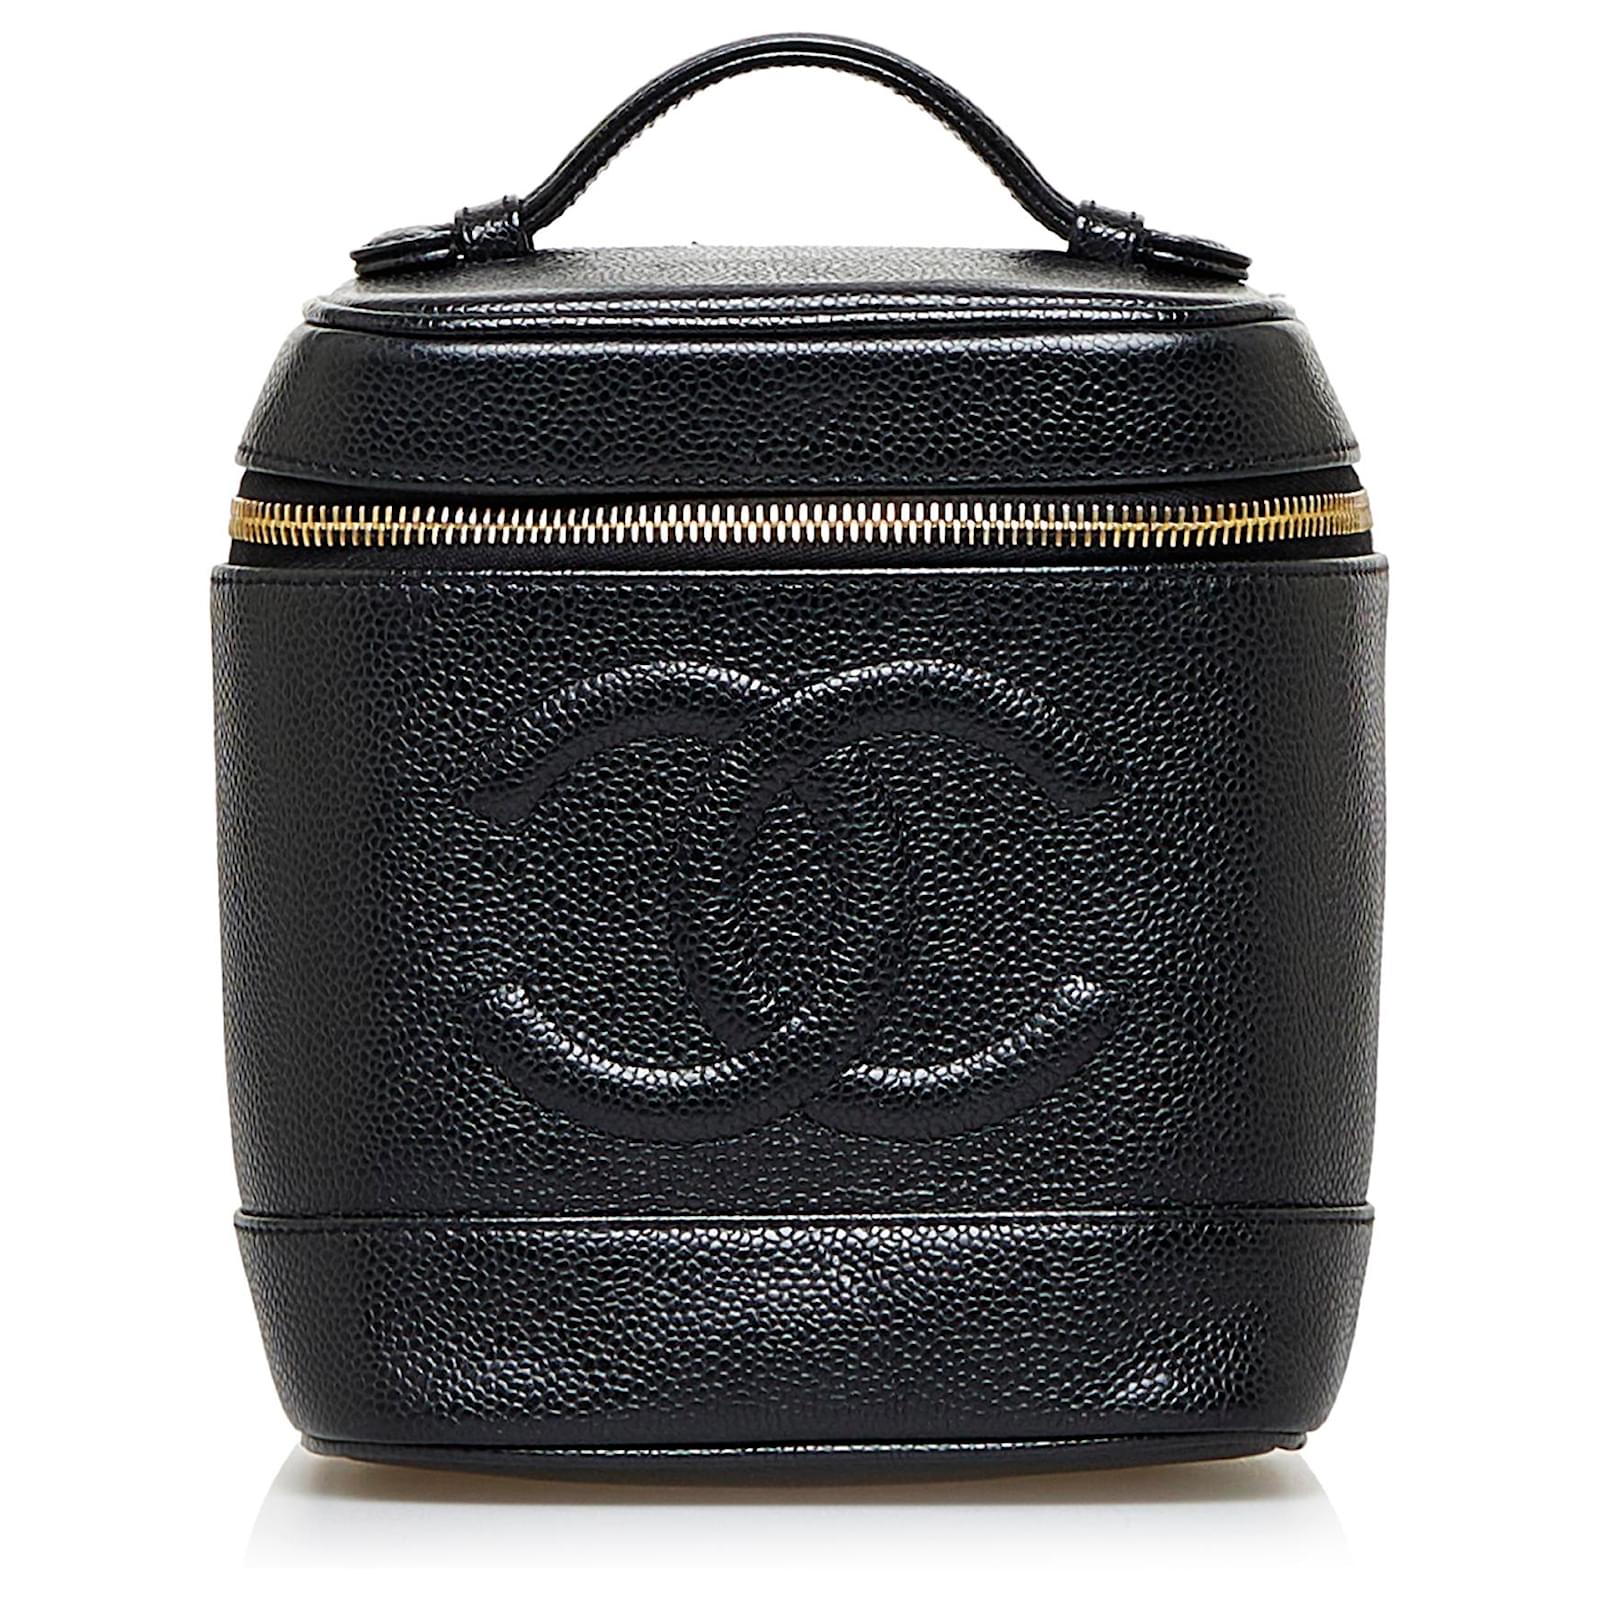 Chanel Black CC Caviar Leather Vanity Bag